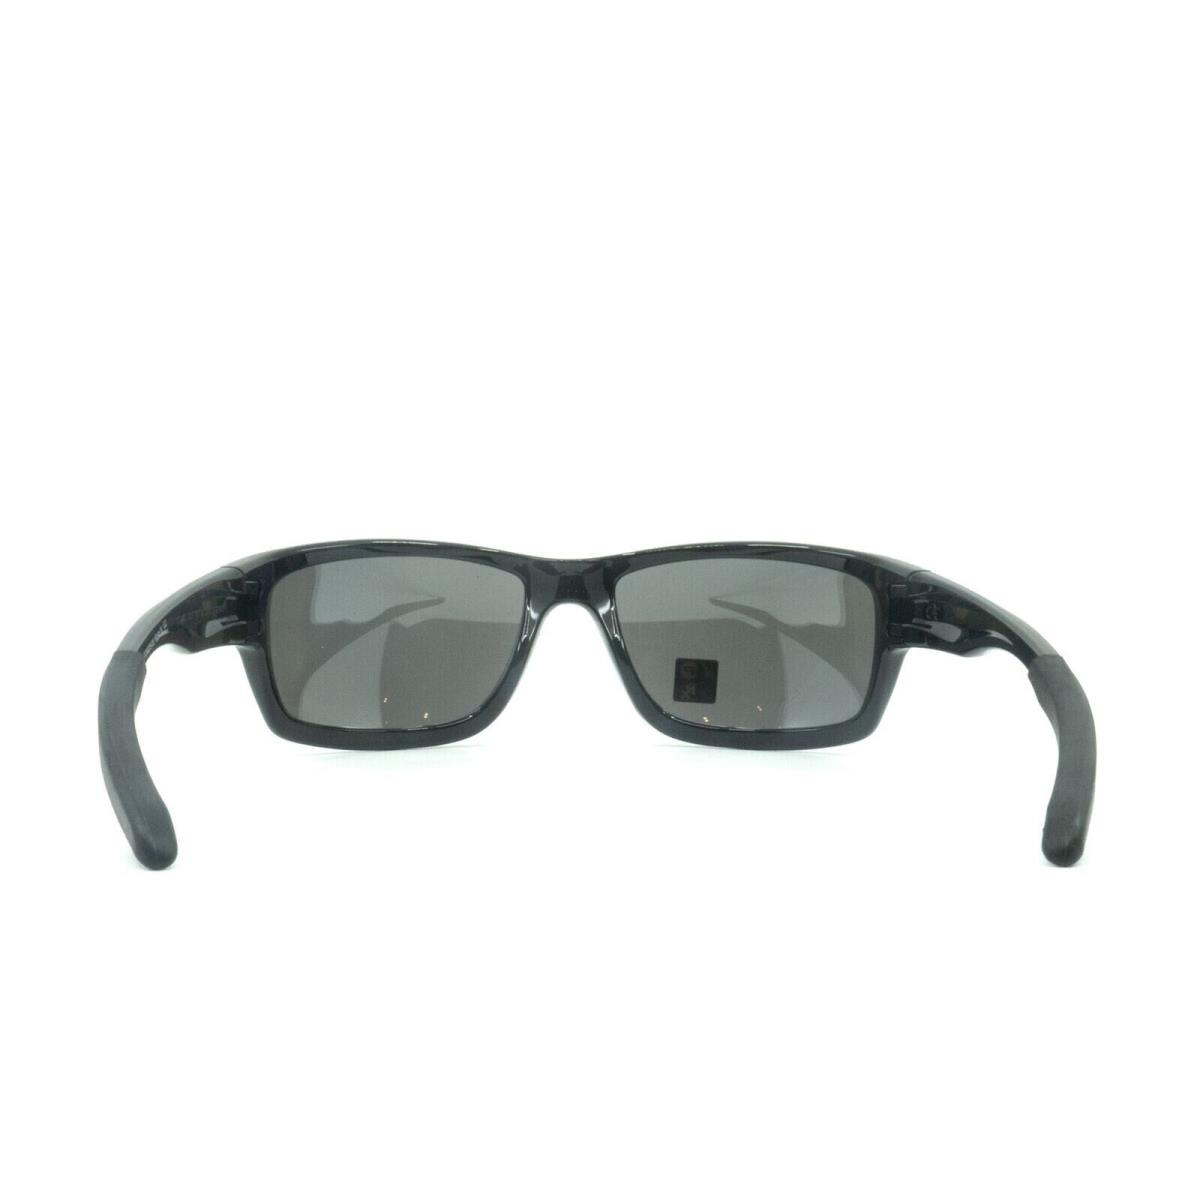 Oakley sunglasses Canteen - Black Frame, Black Lens 3